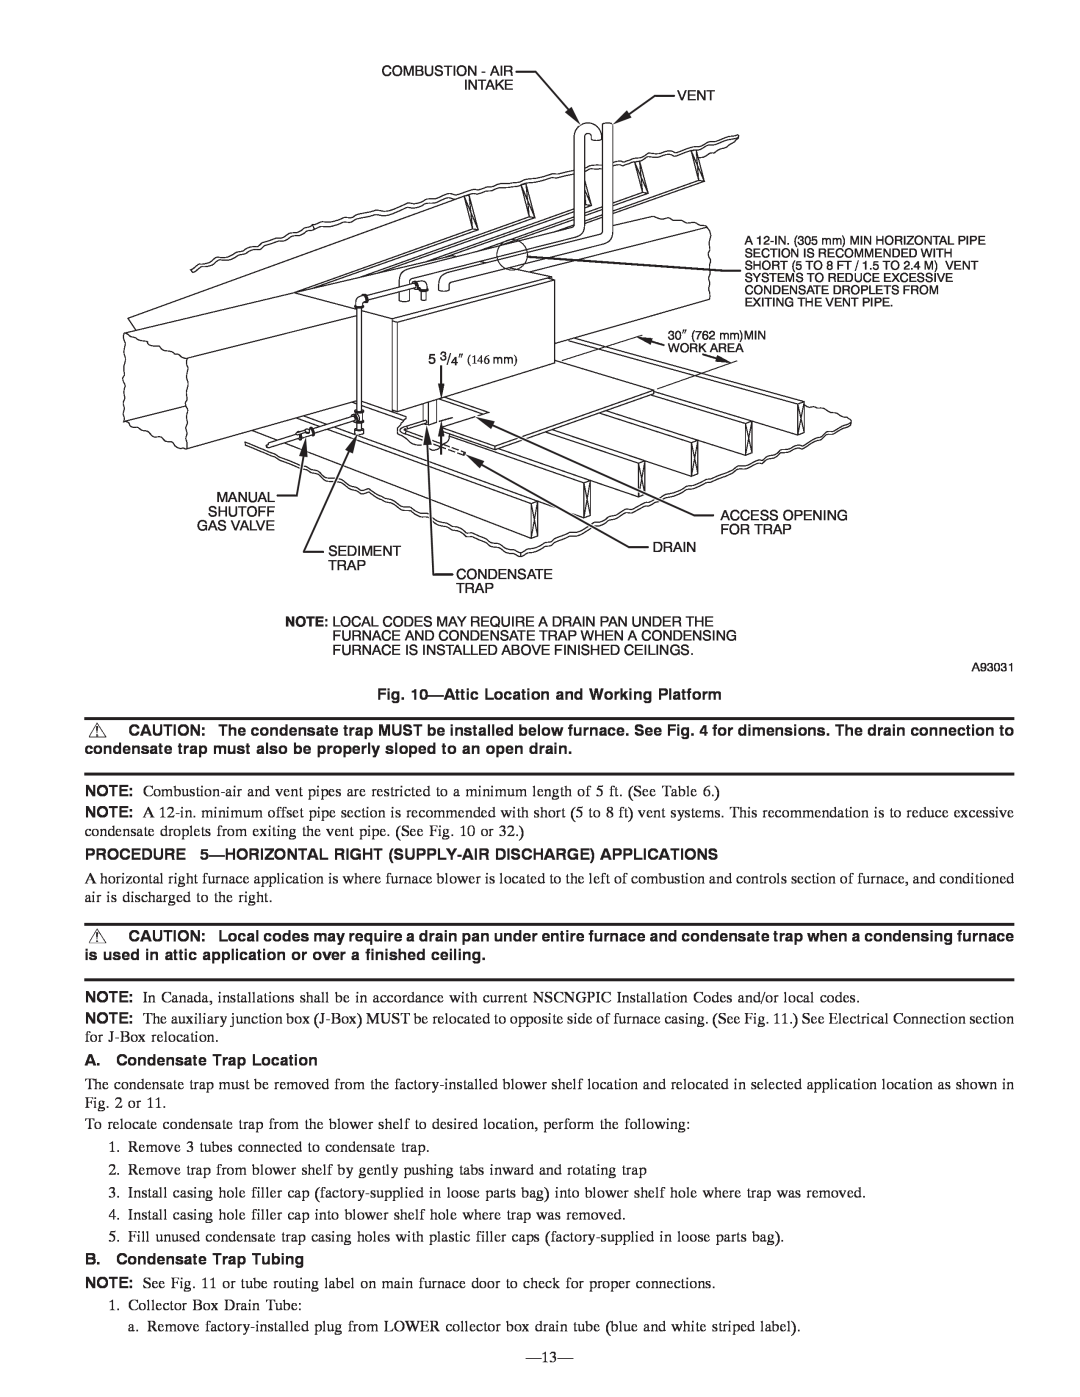 Bryant 355MAV instruction manual AtticLocation and Working Platform, A. Condensate Trap Location, B. Condensate Trap Tubing 